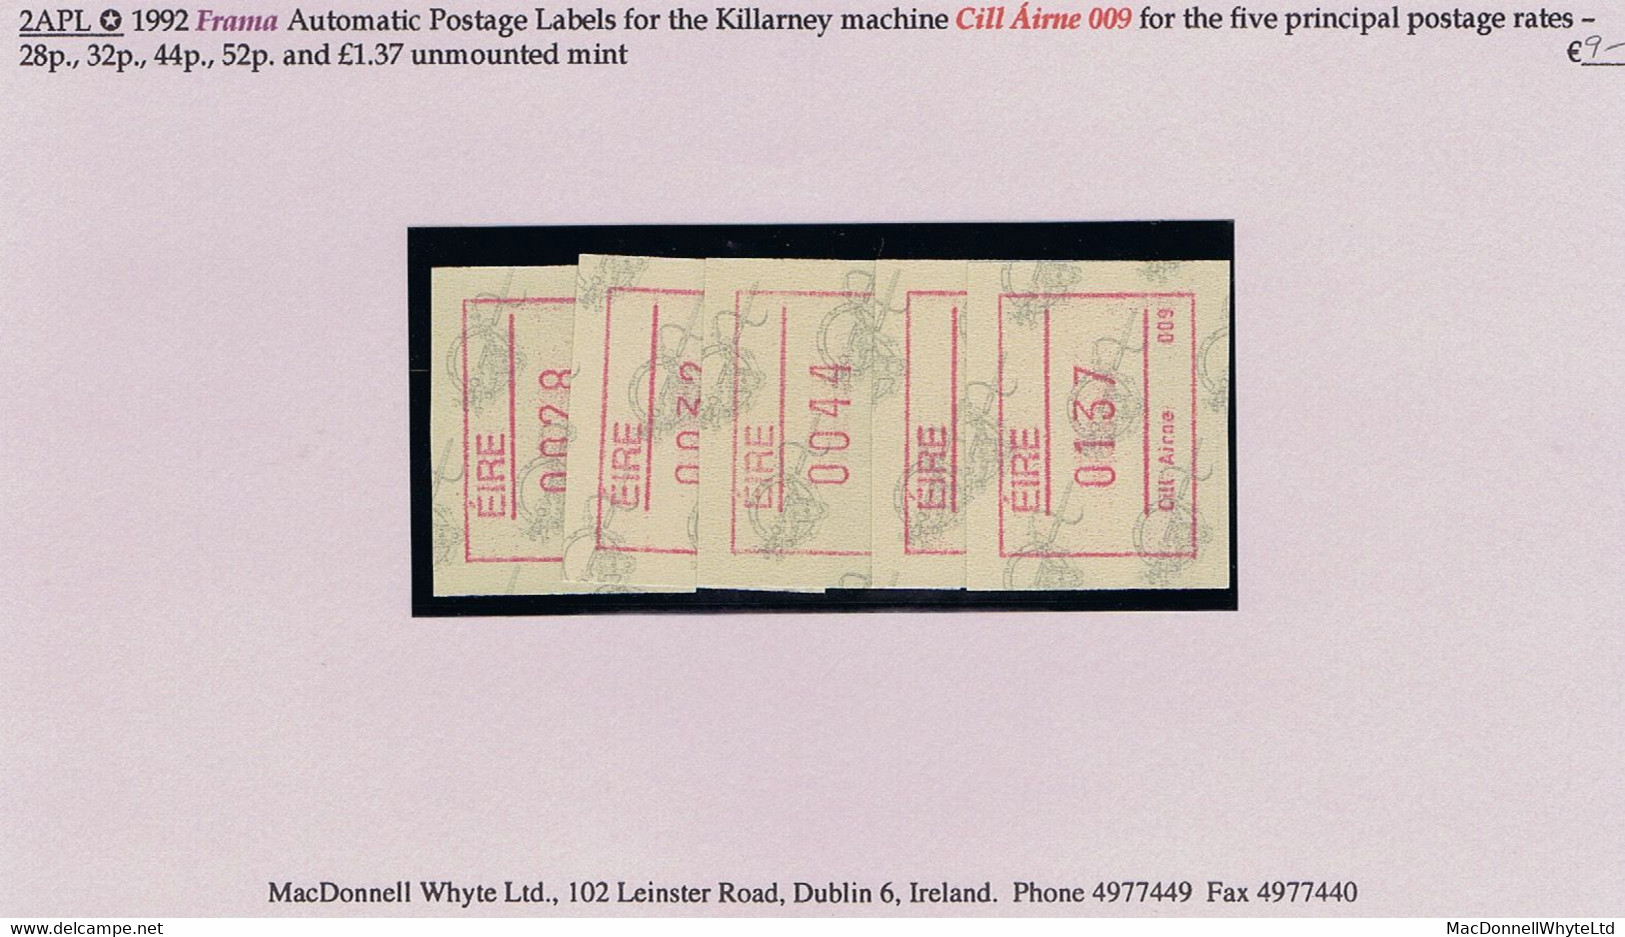 Ireland 1992 Frama Automatic Postage Labels For Killarney 009 Machine For Five Rates 28p, 32p, 44p, 52p, £1.37 Mint - Vignettes D'affranchissement (Frama)